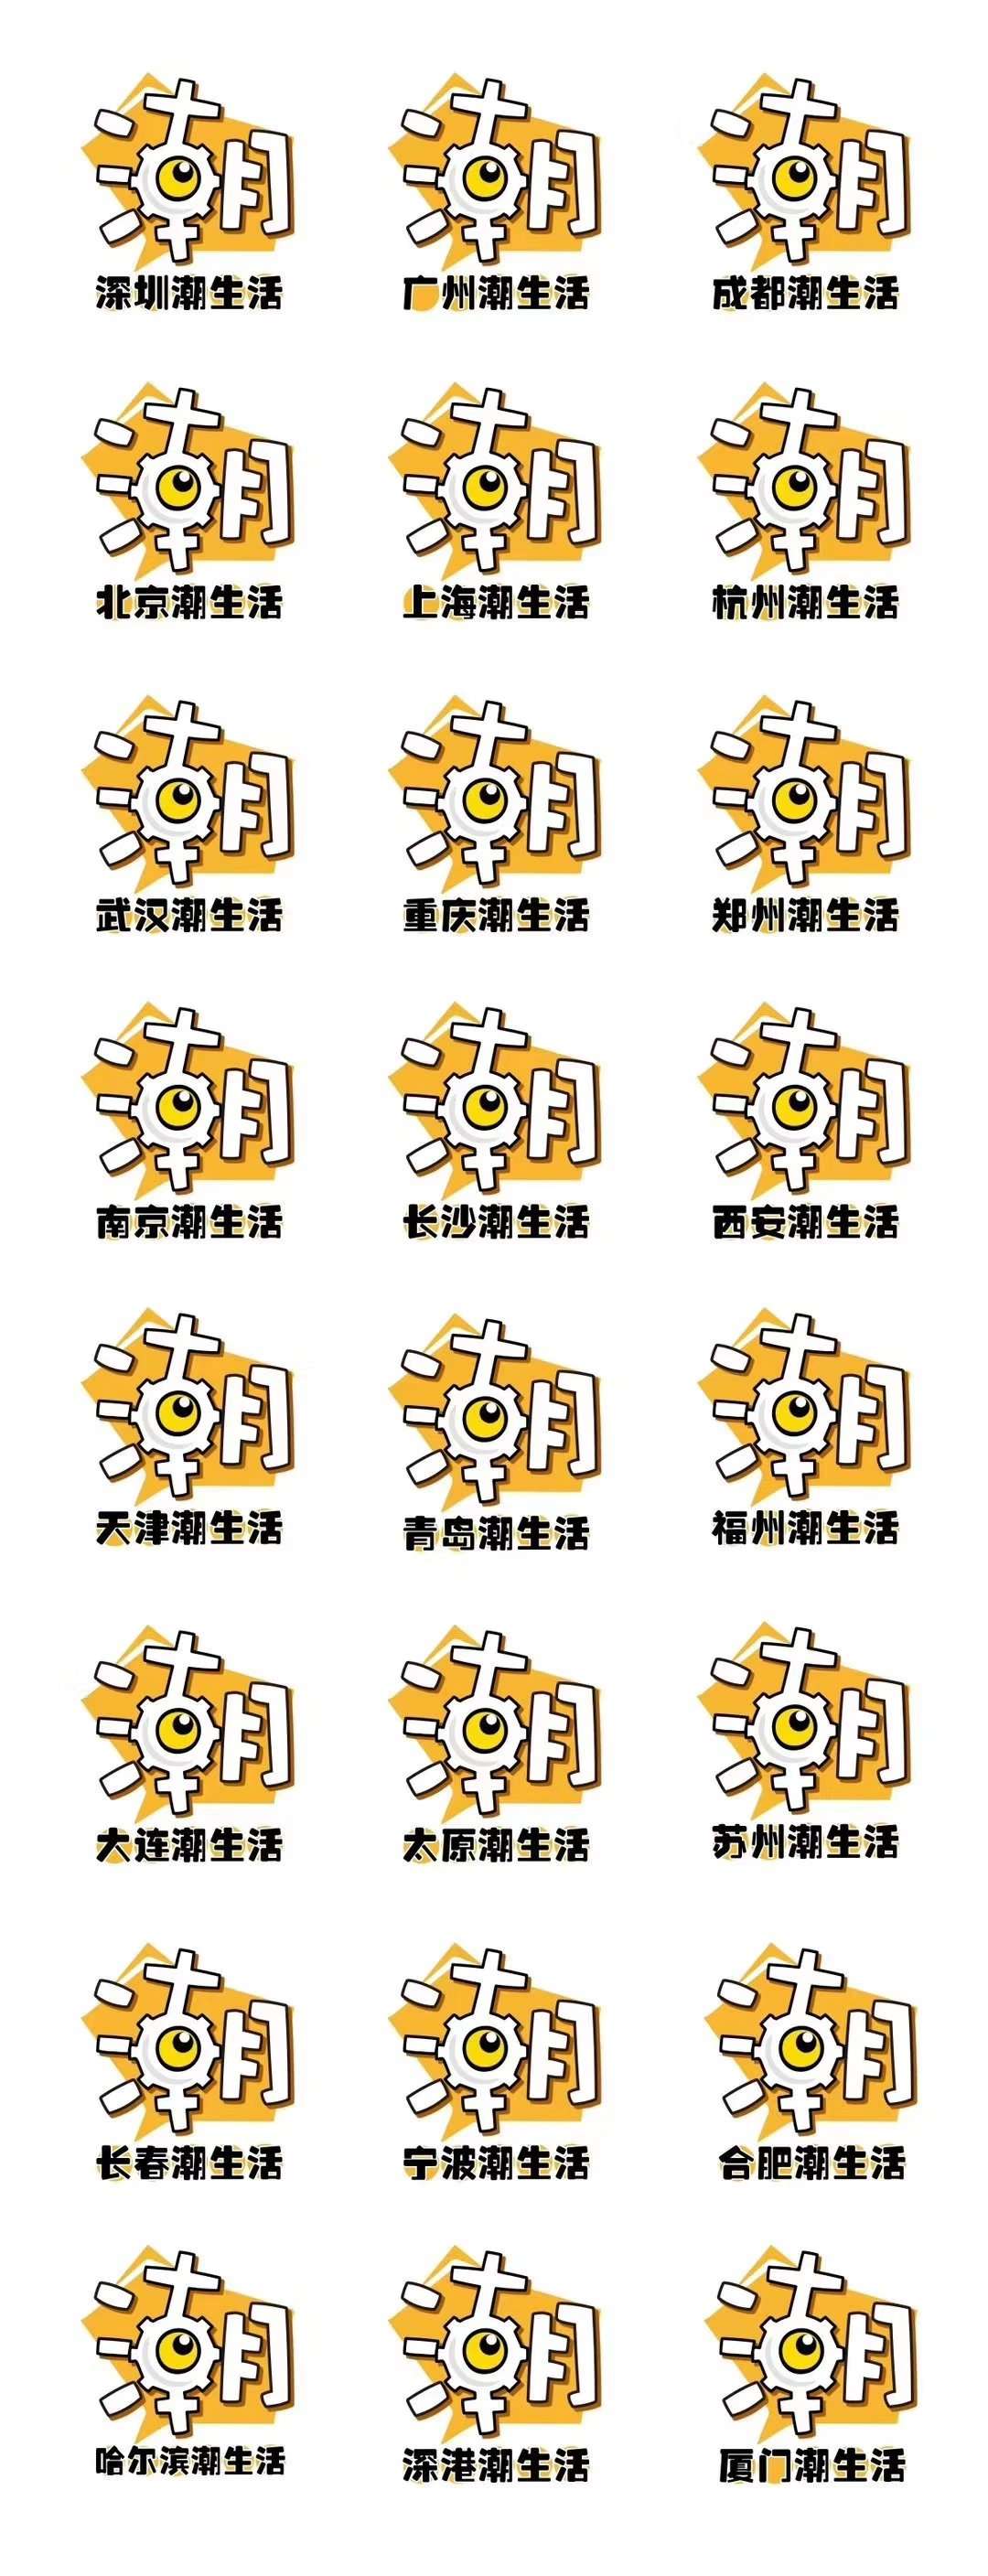 https://static.zhaoguang.com/image/2020/4/16/d9lGhzOEjJ4duEYTZykJ.jpg